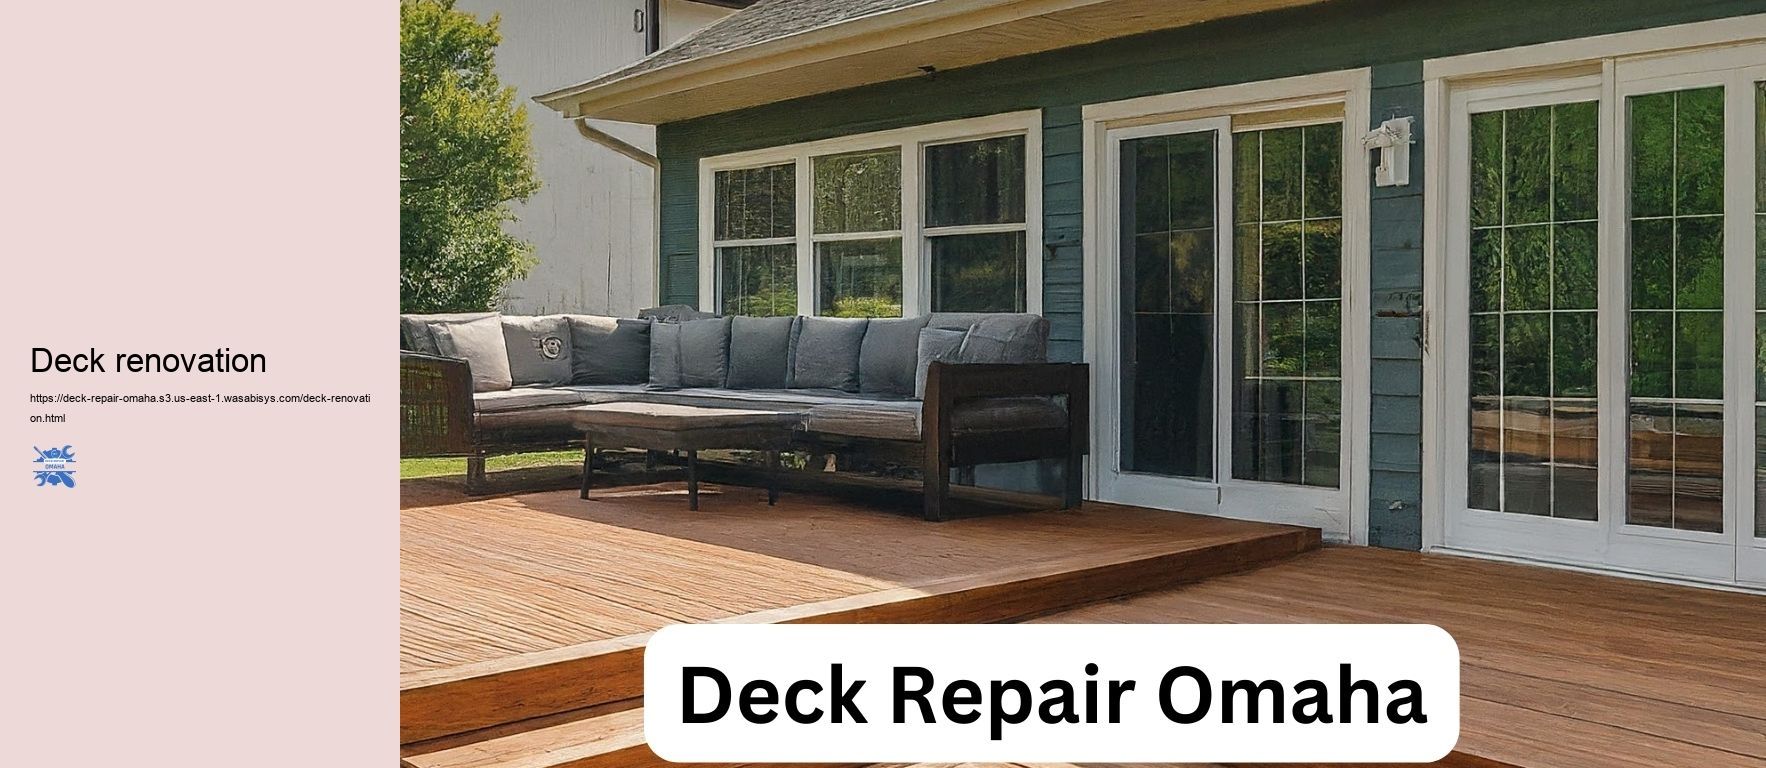 Deck renovation